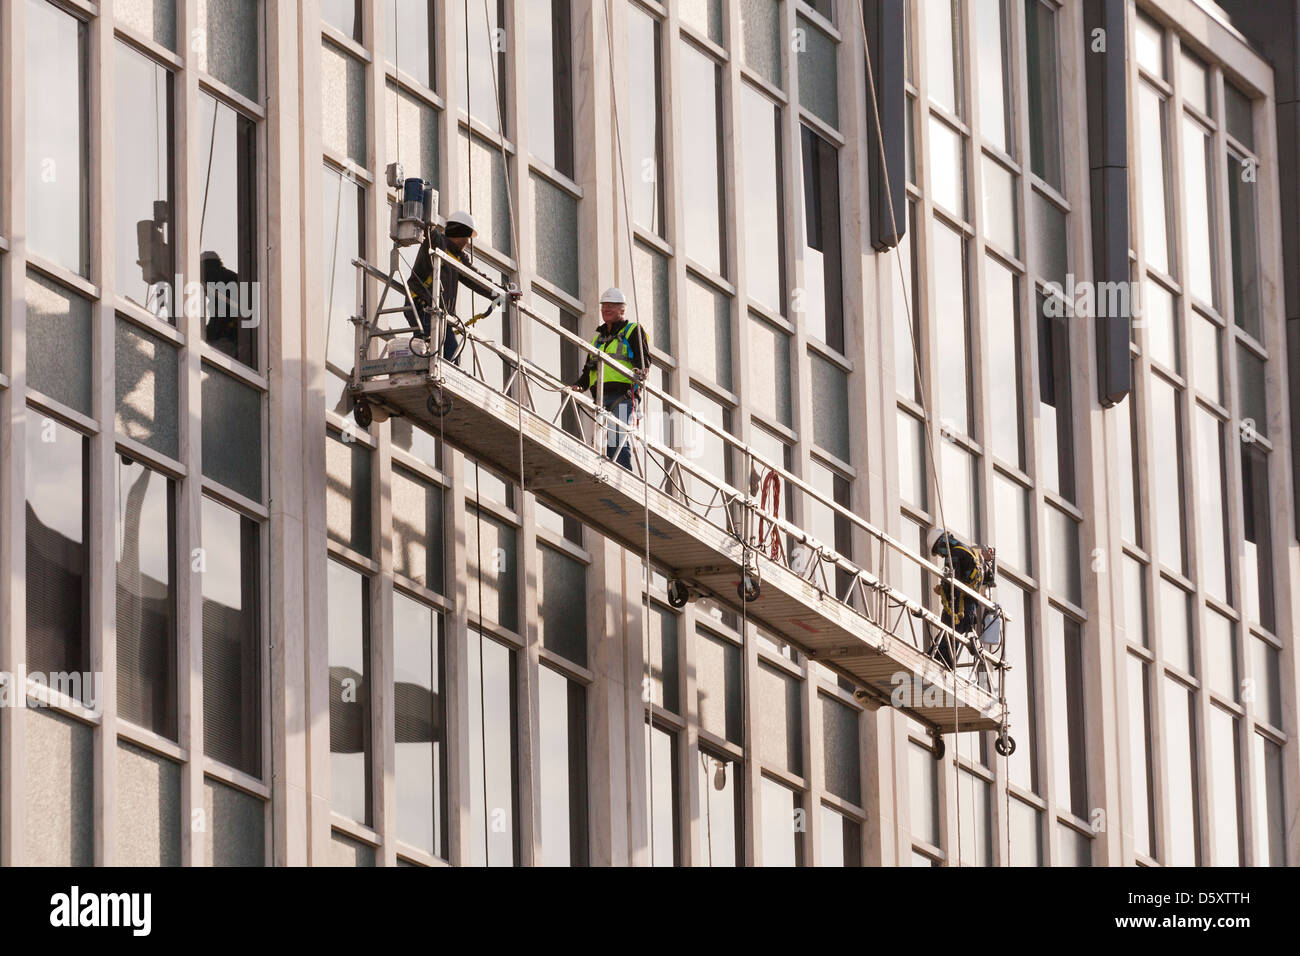 Men working on areal work platform - USA Stock Photo